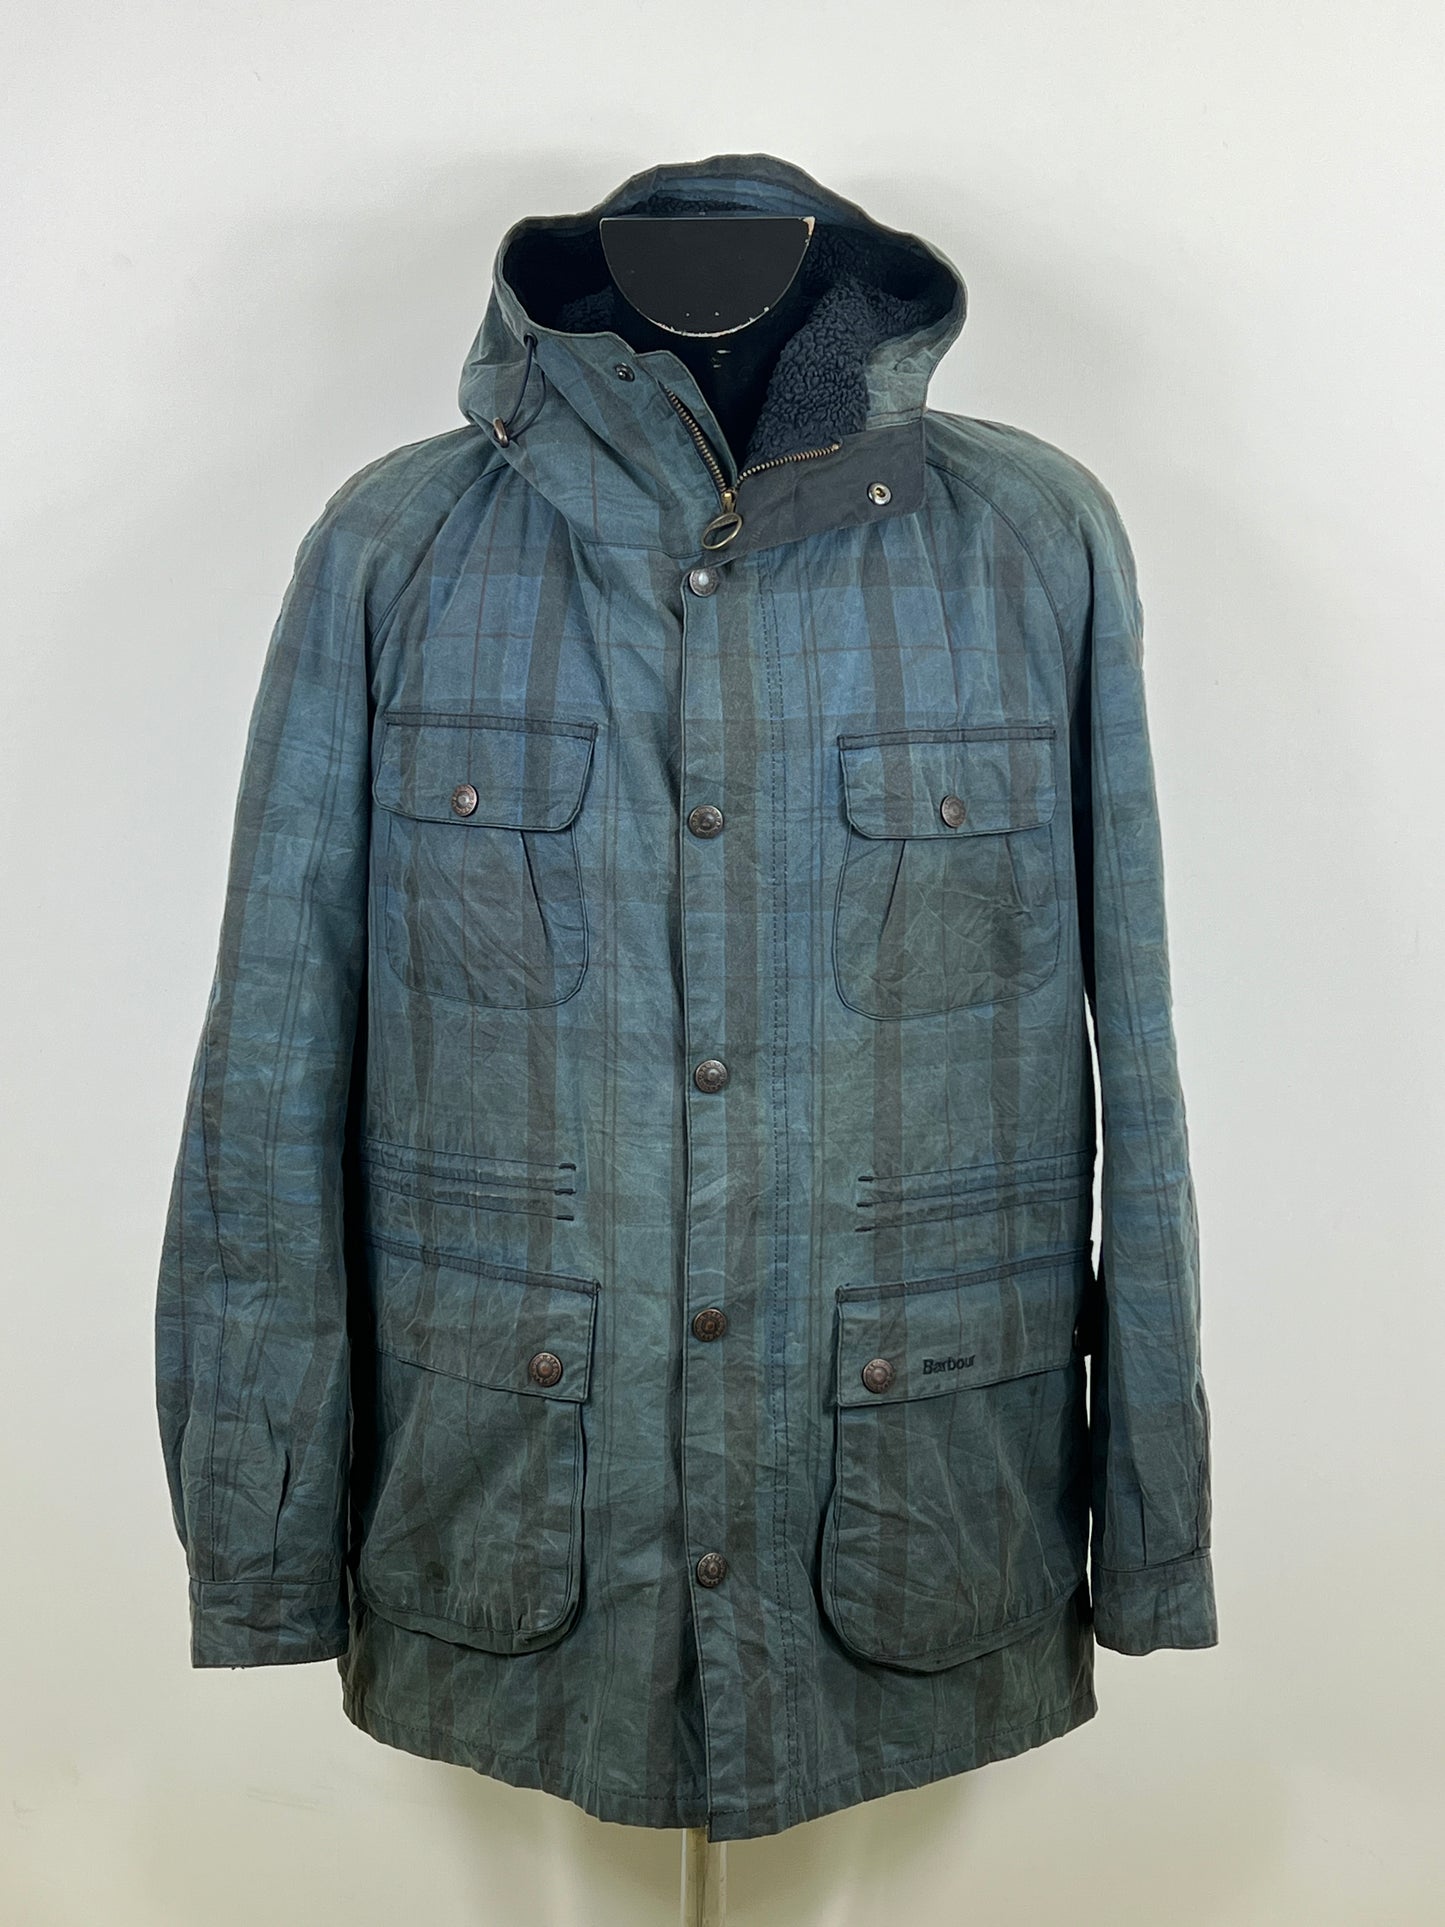 Parka Barbour da uomo Blundel blu XLarge - Man wax Blue Blundel Wax jacket size XL